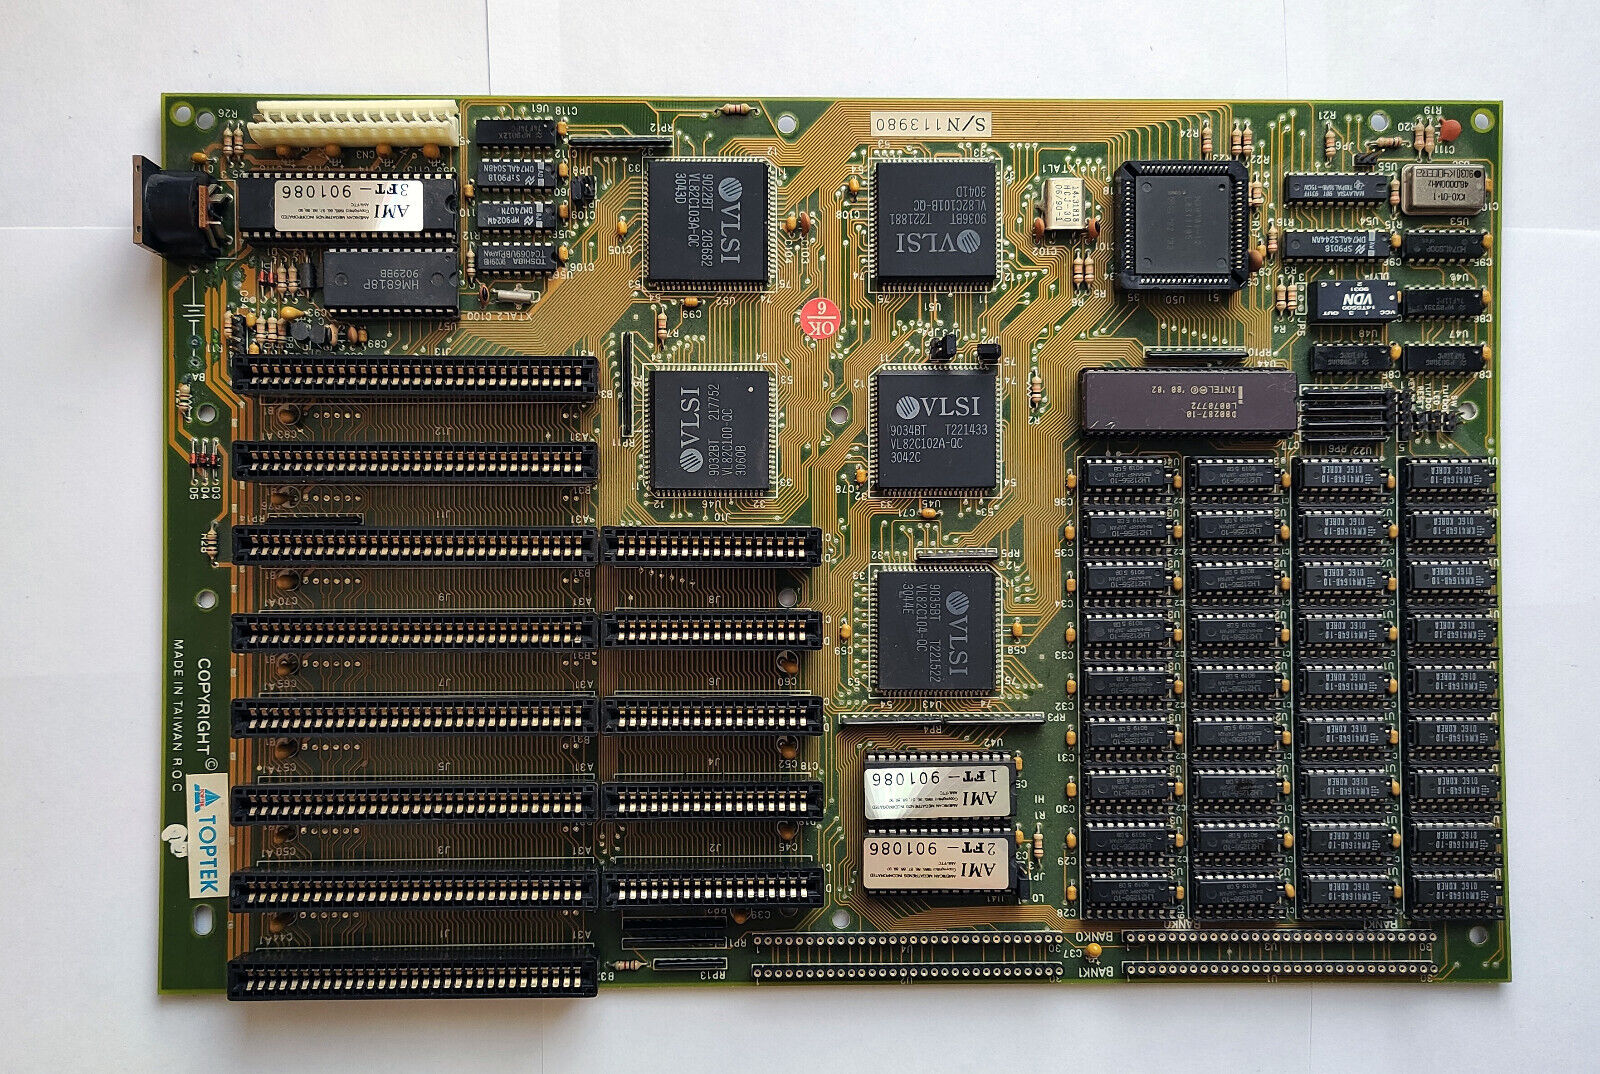 Toptek 286 Motherboard with intel N80286-12 CPU and D80287-10 Ceramic FPU